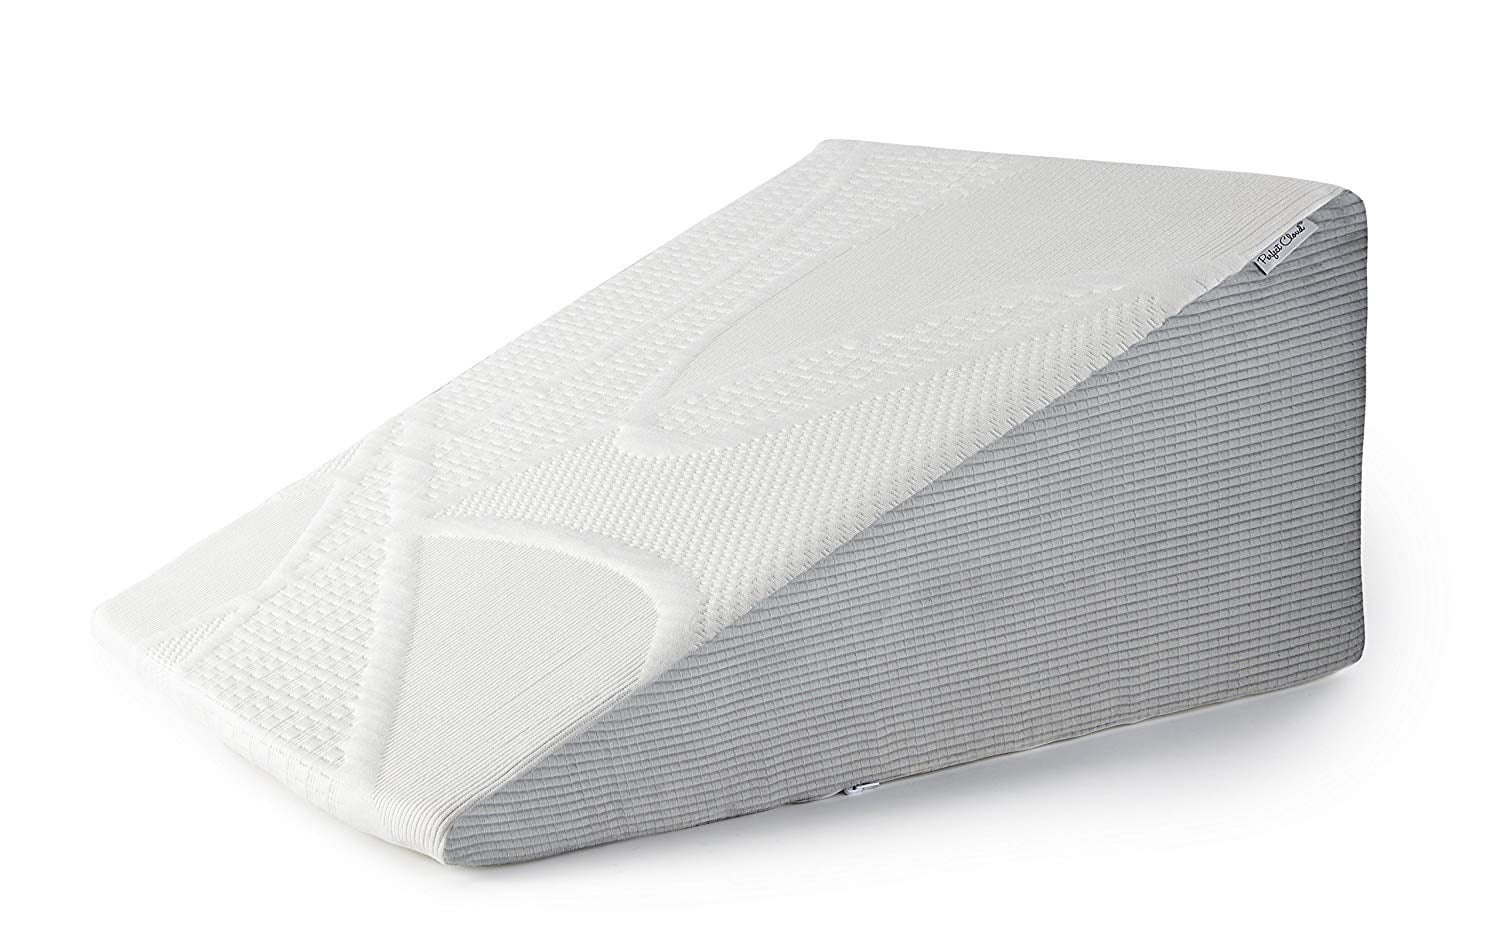 sleeplanner multipurpose memory foam mattress wedge pillow